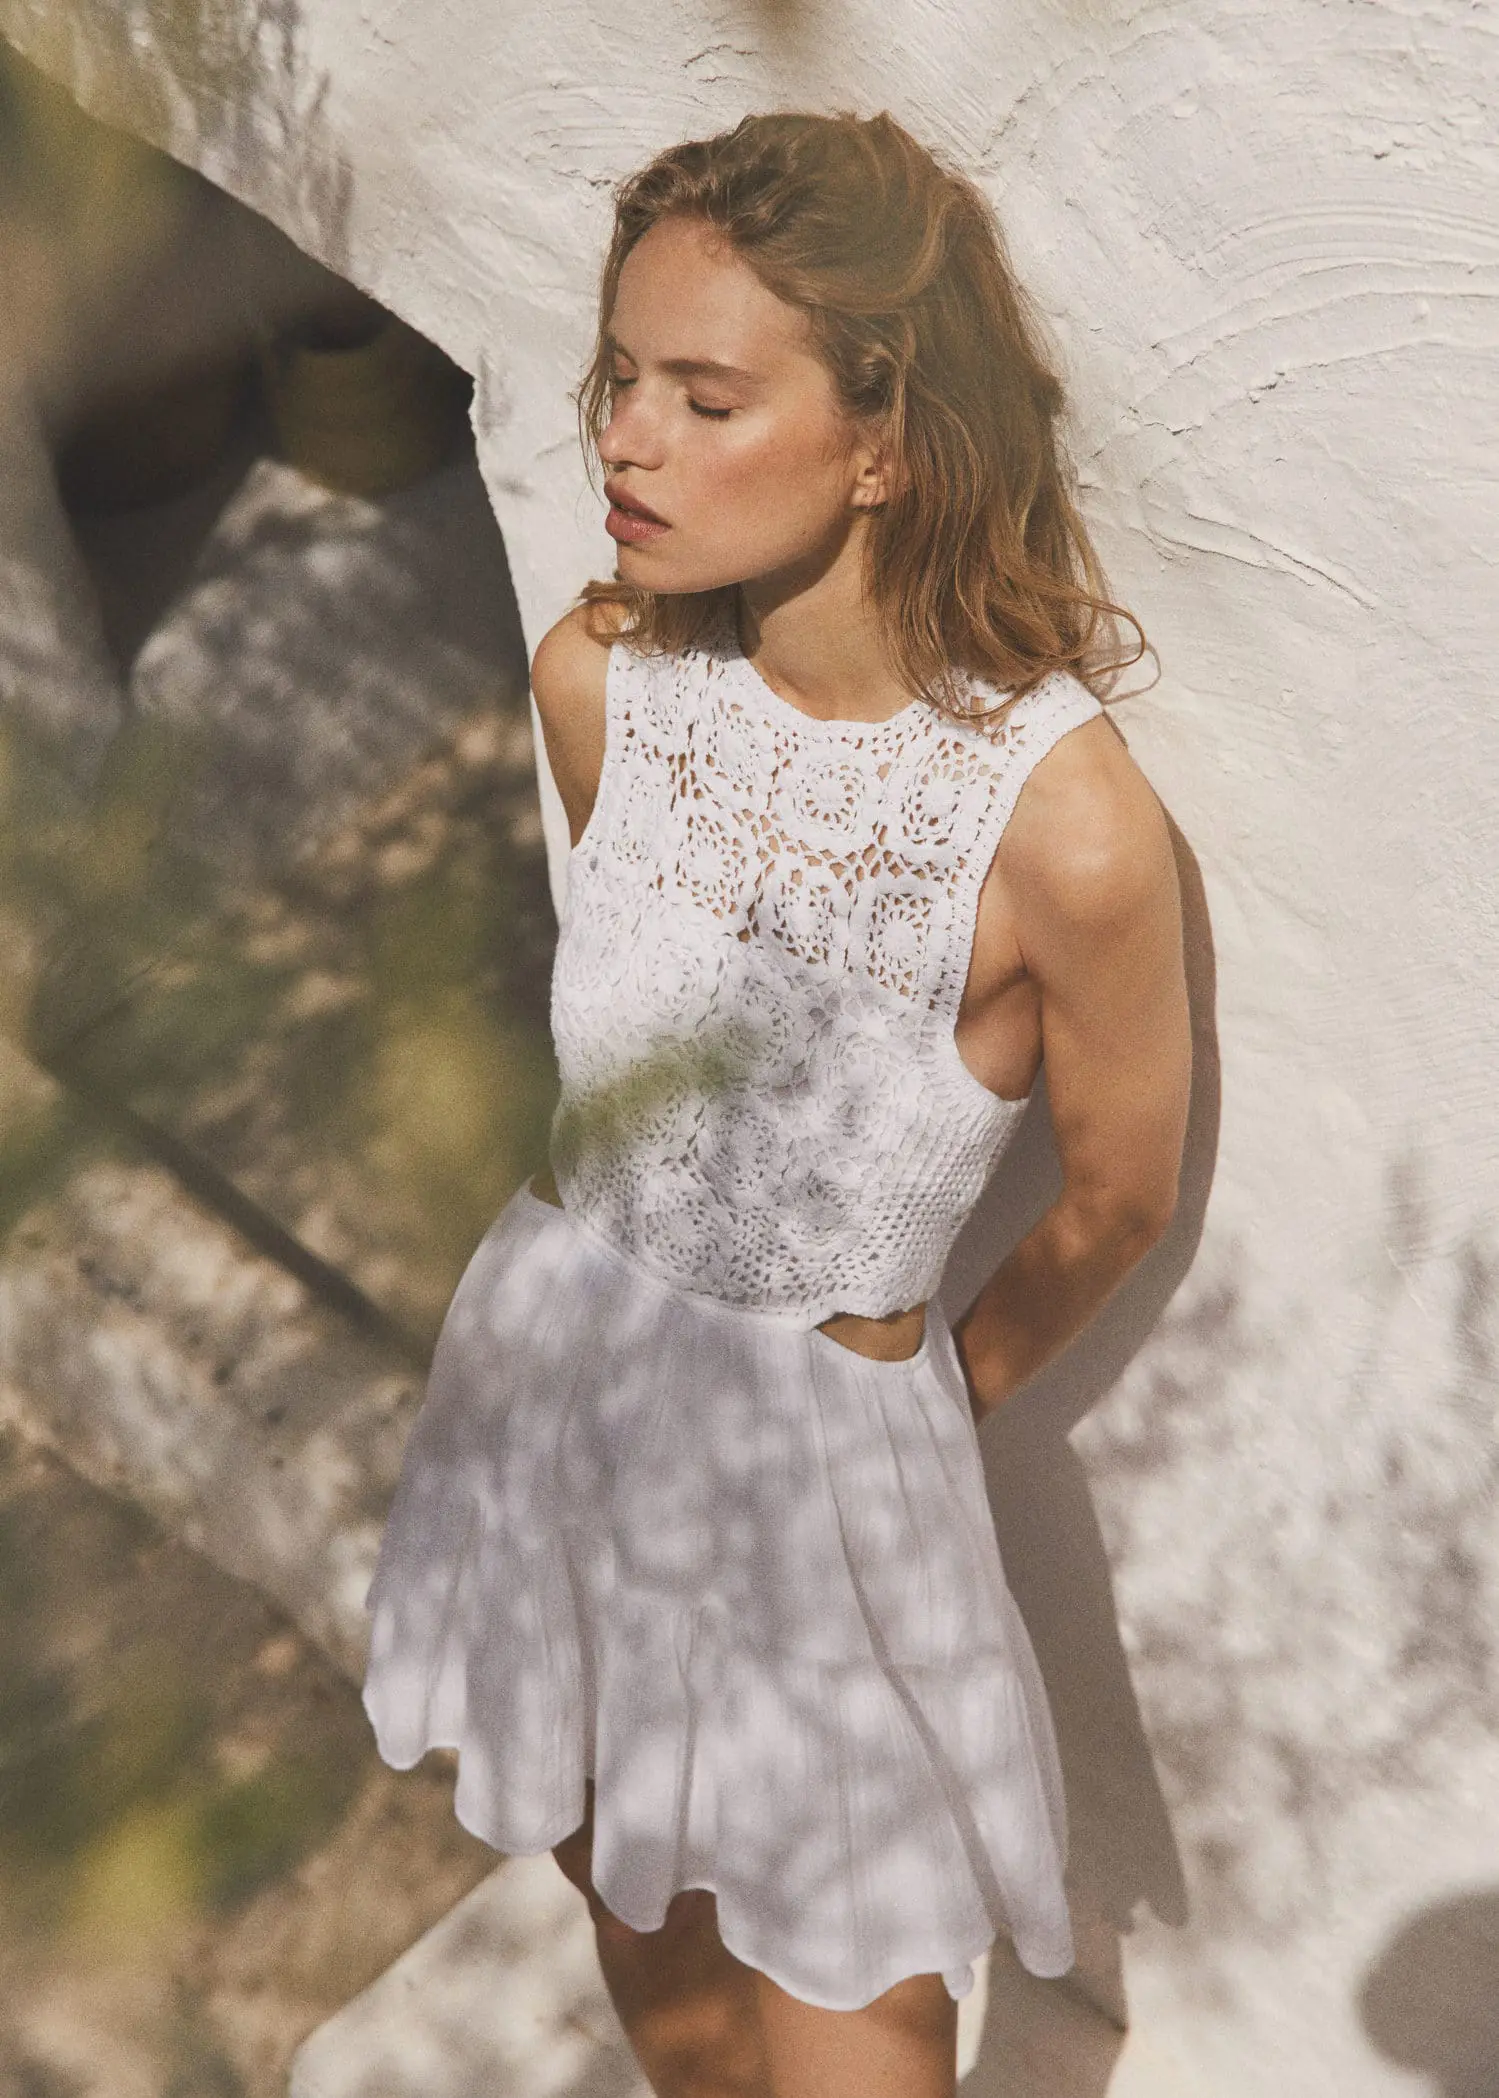 Mango Crochet dress with openings. a beautiful young lady wearing a white dress. 